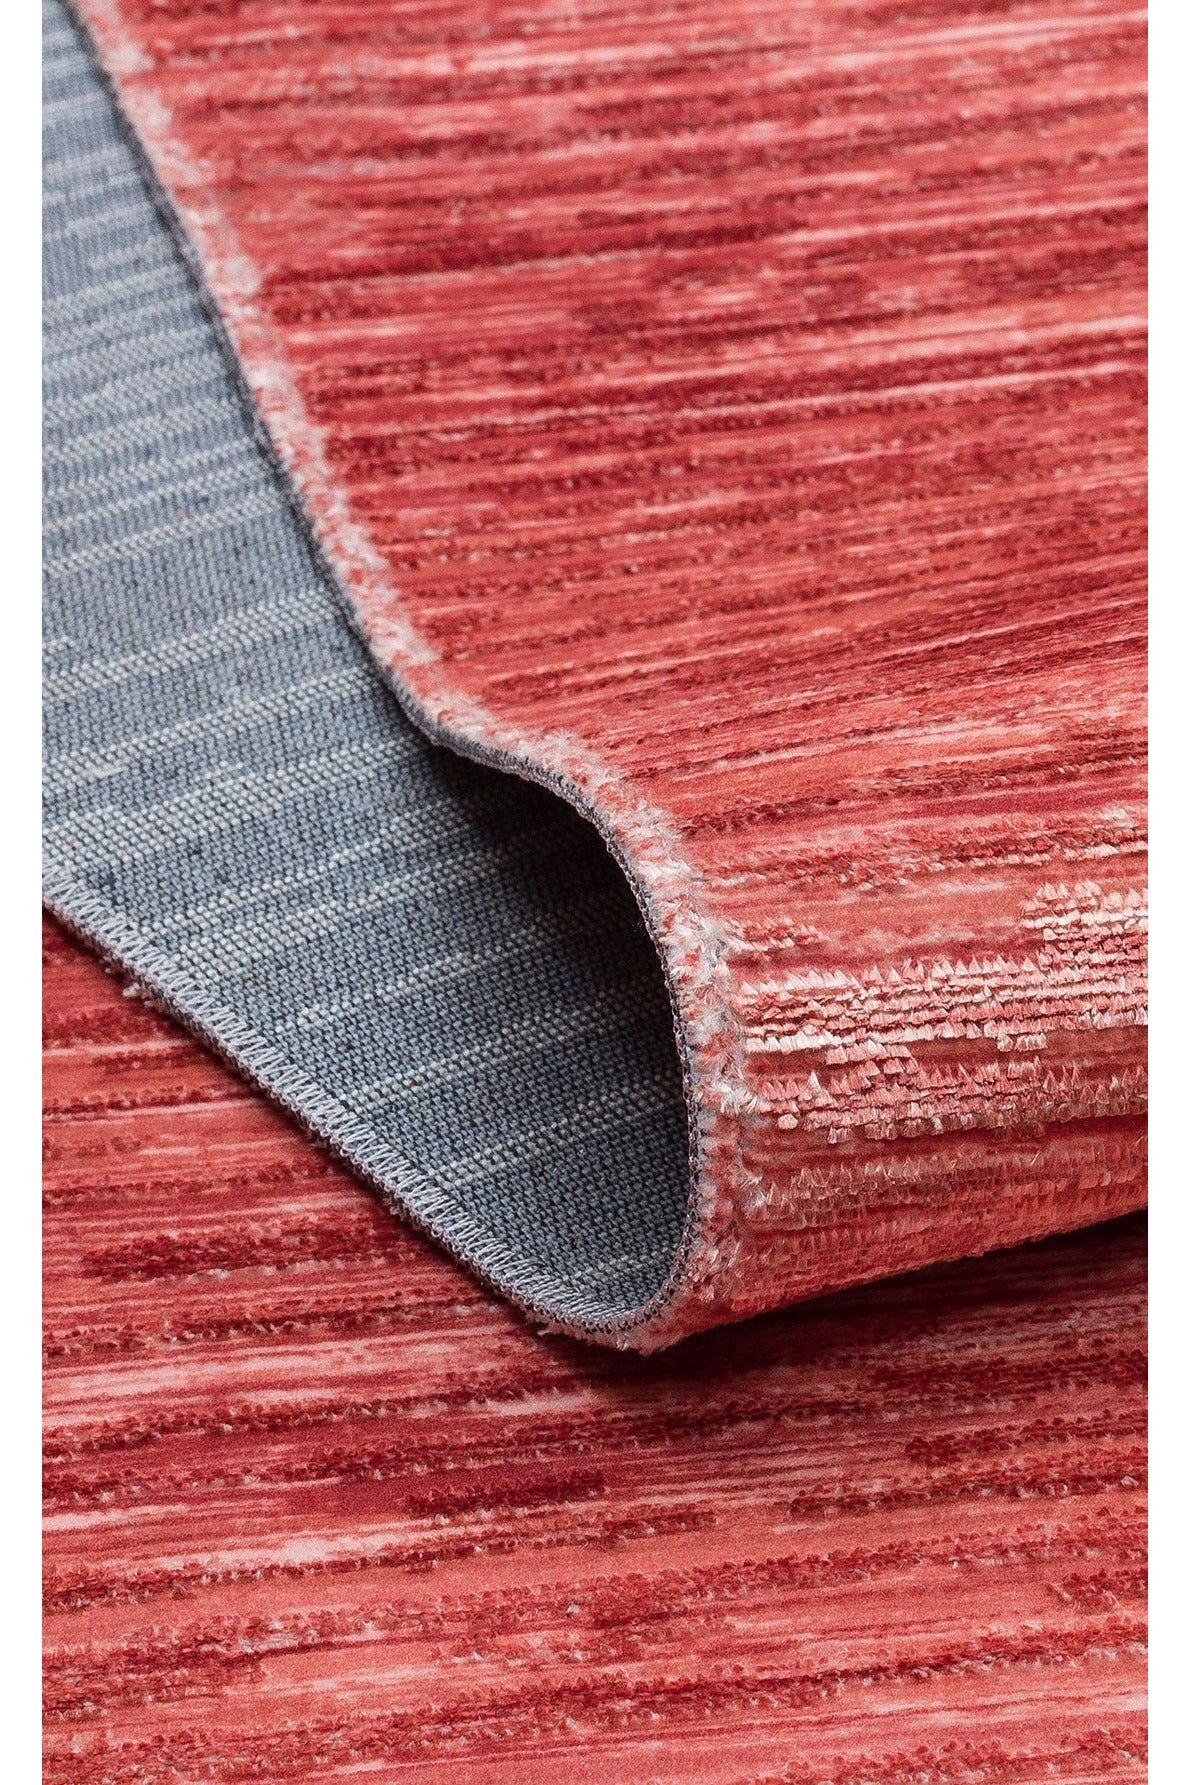 #Turkish_Carpets_Rugs# #Modern_Carpets# #Abrash_Carpets#Cst Plain Terra